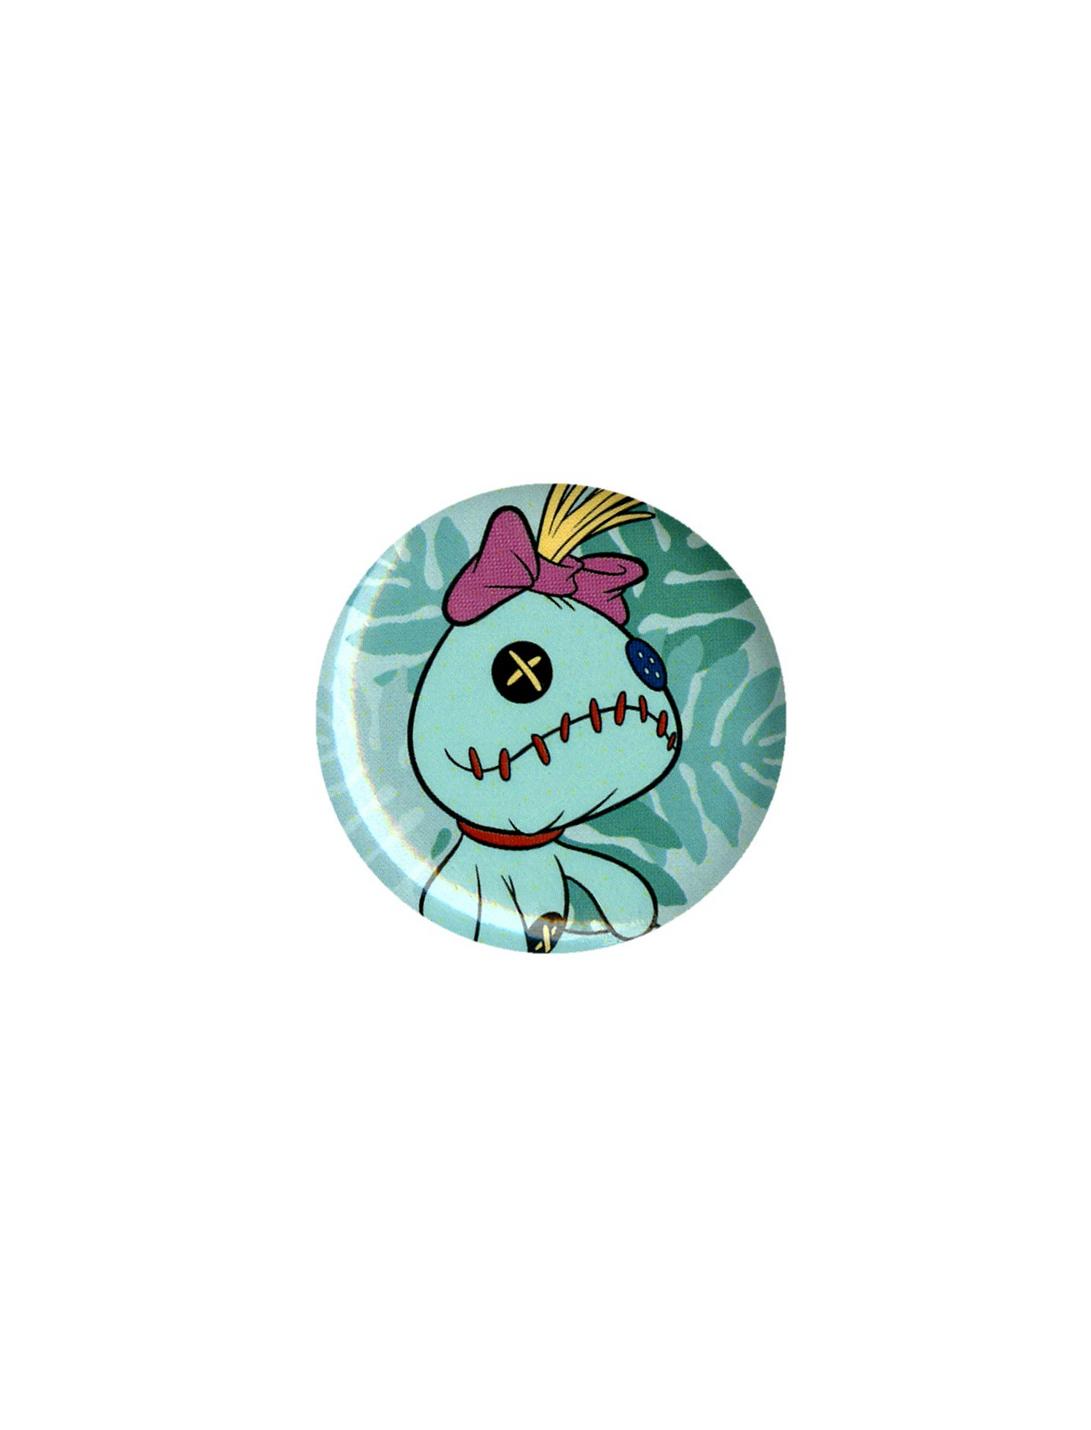 Disney Lilo & Stitch Scrump Pin, , hi-res